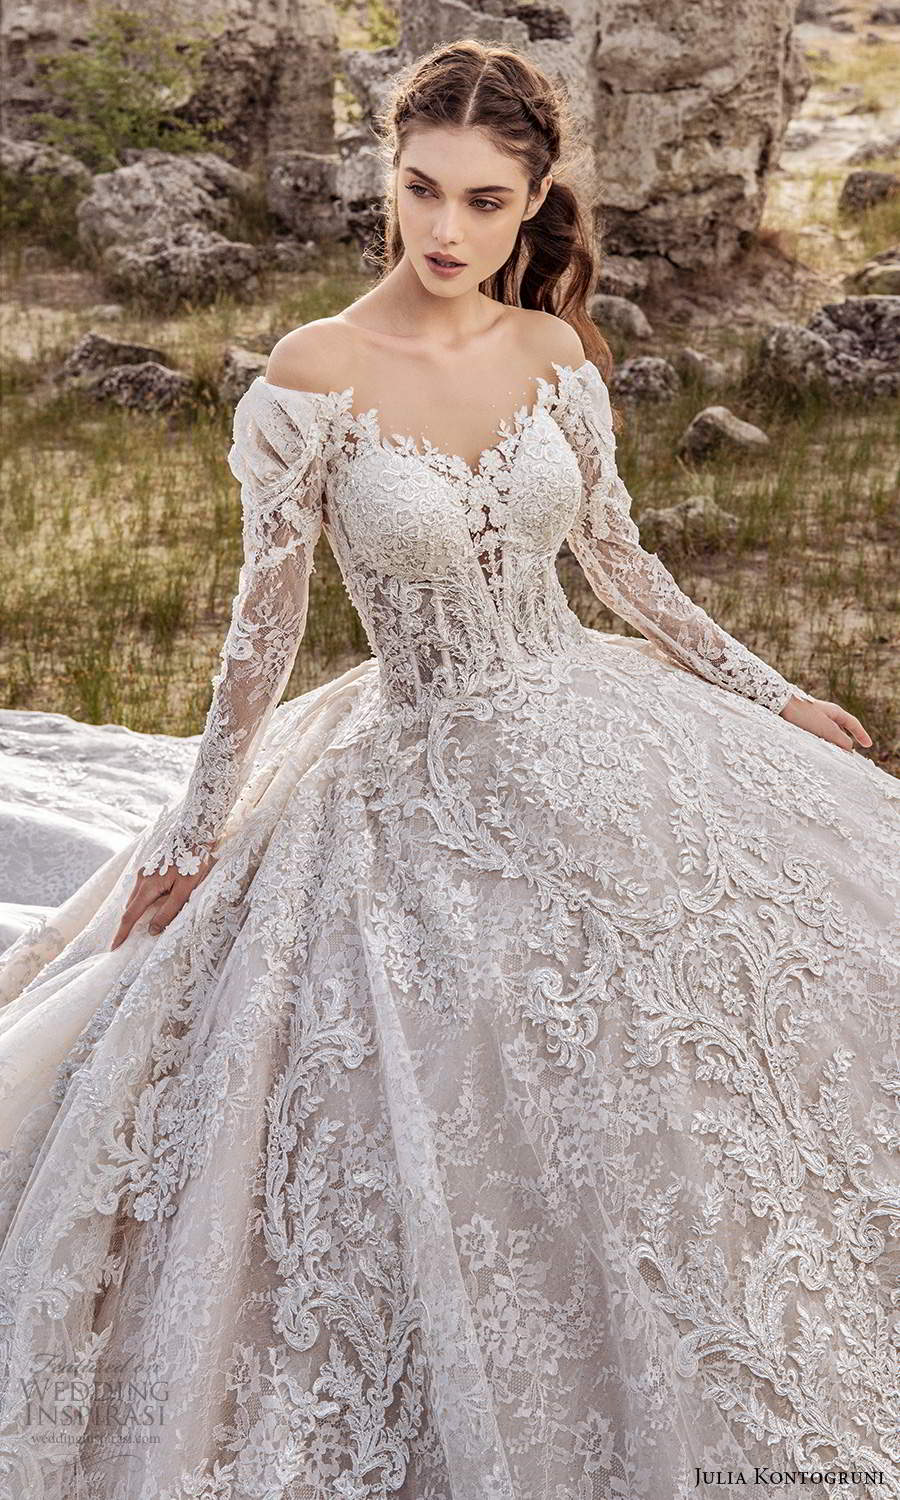 julia kontogruni 2021 bridal long sleeves off shouldler sweetheart neckline fully embellished ball gown wedding dress cathedral train (5) zv